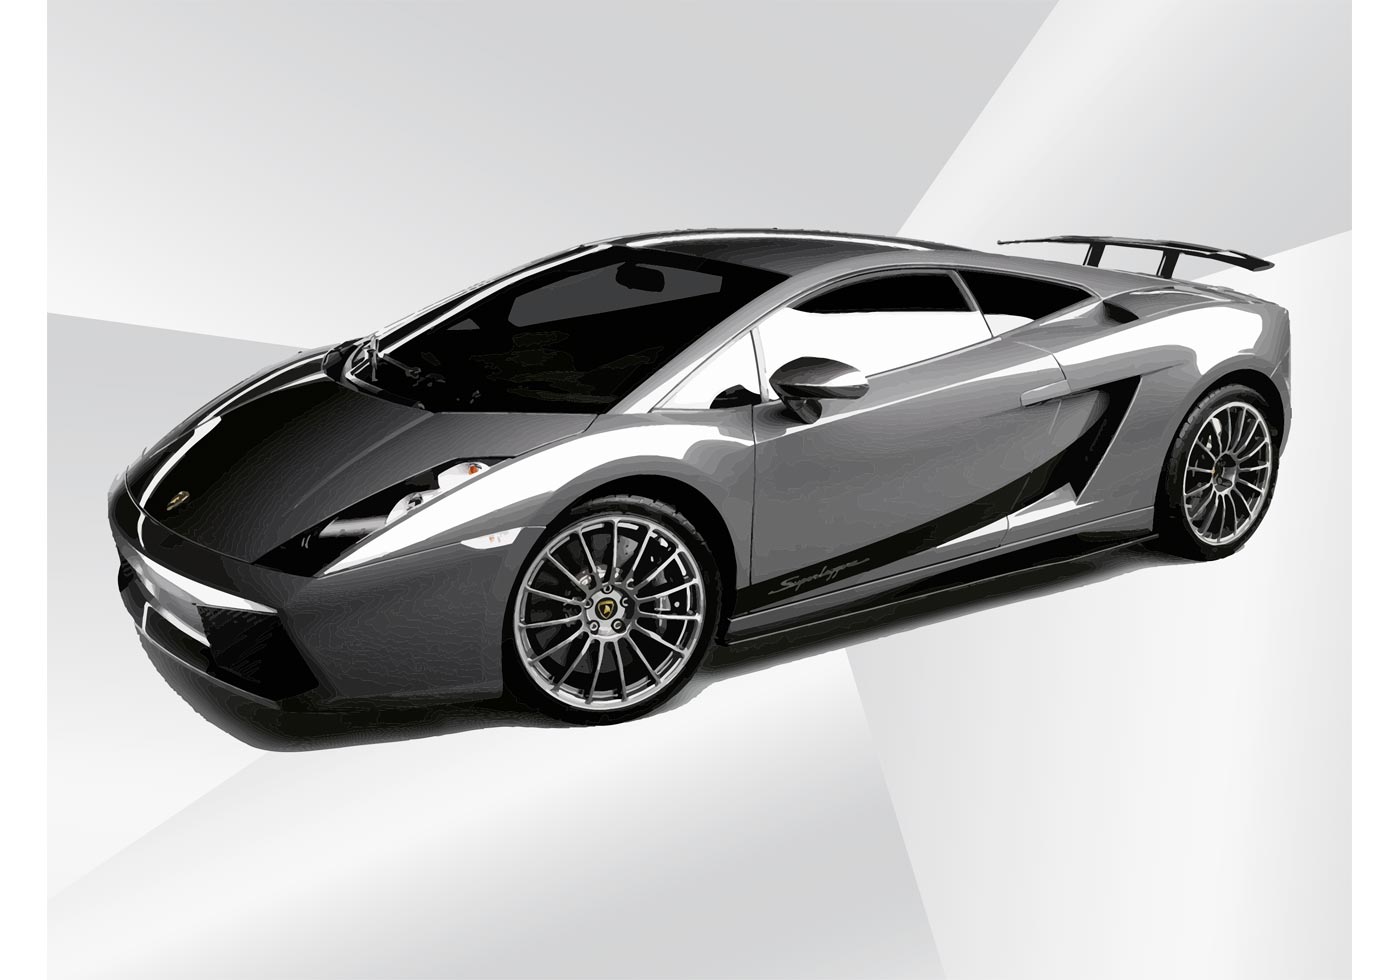 Lamborghini Free Vector Art - (4,642 Free Downloads)